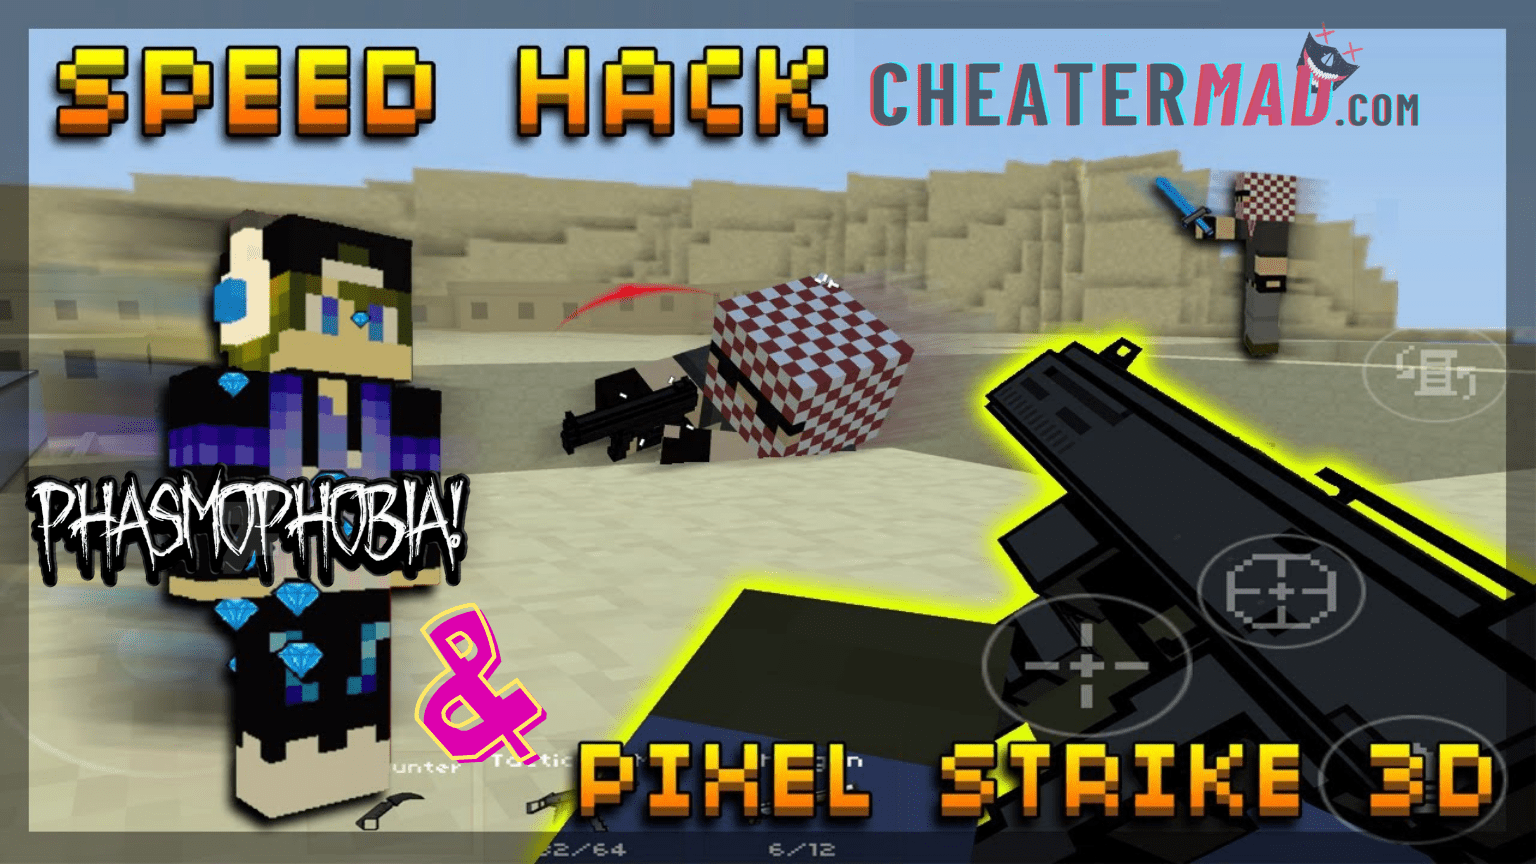 Universal Speedhack Pixel Strike 3d Phasmophobia Secret Neighbour Dead Raid Cheatermad Com - roblox kick off speed hack